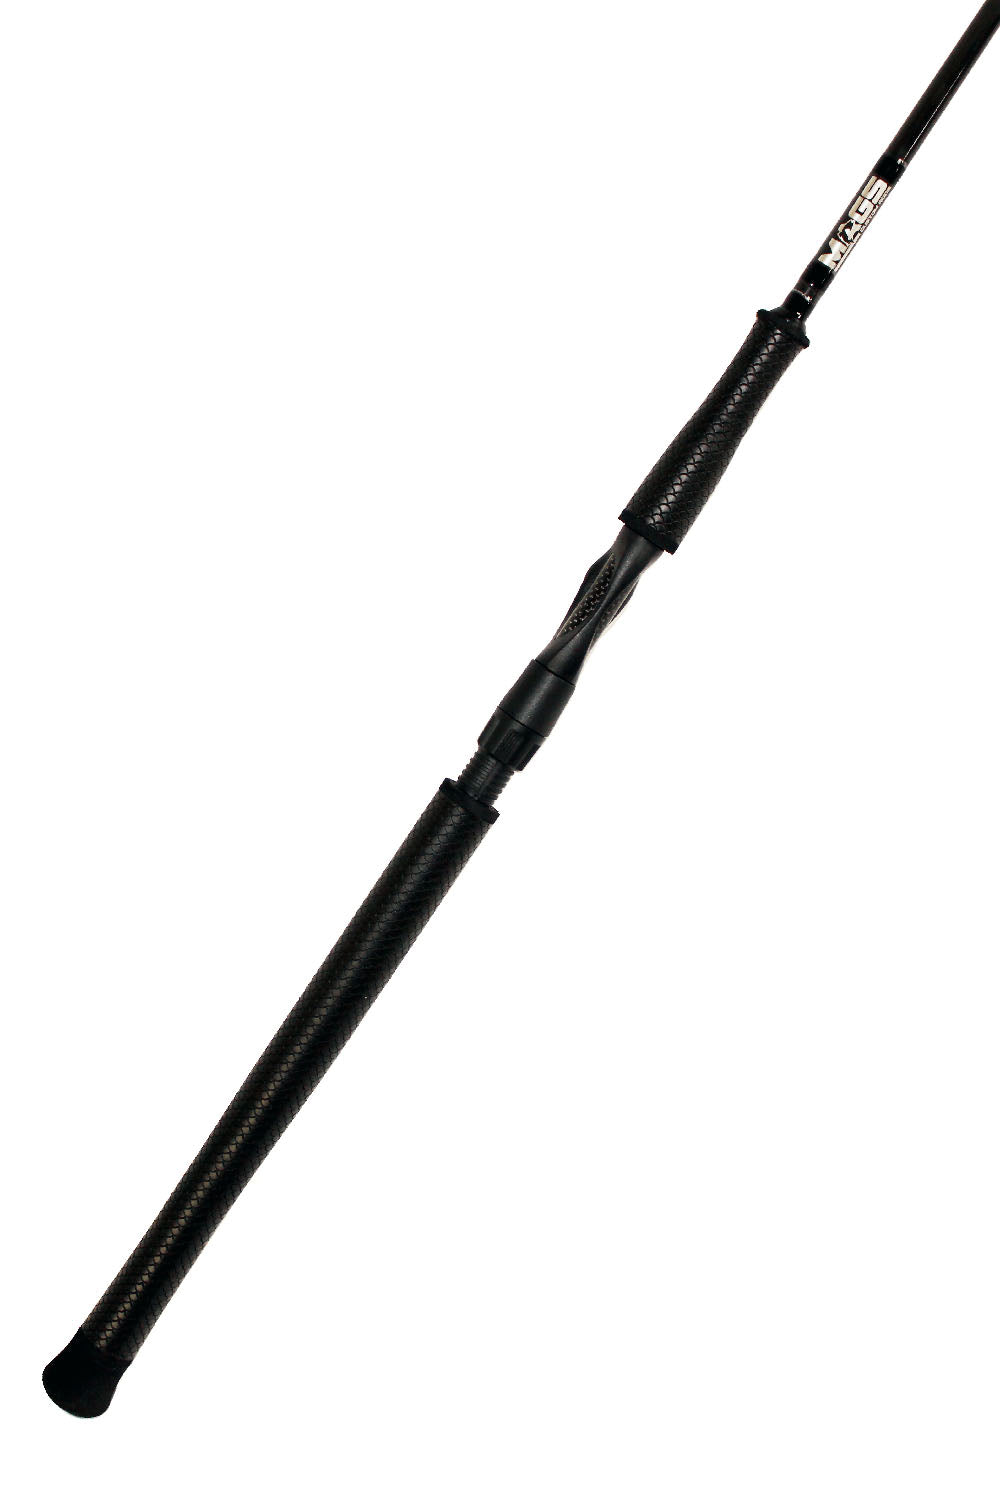 Pre-Built Carbon Ice Rod – Mags Custom Rods